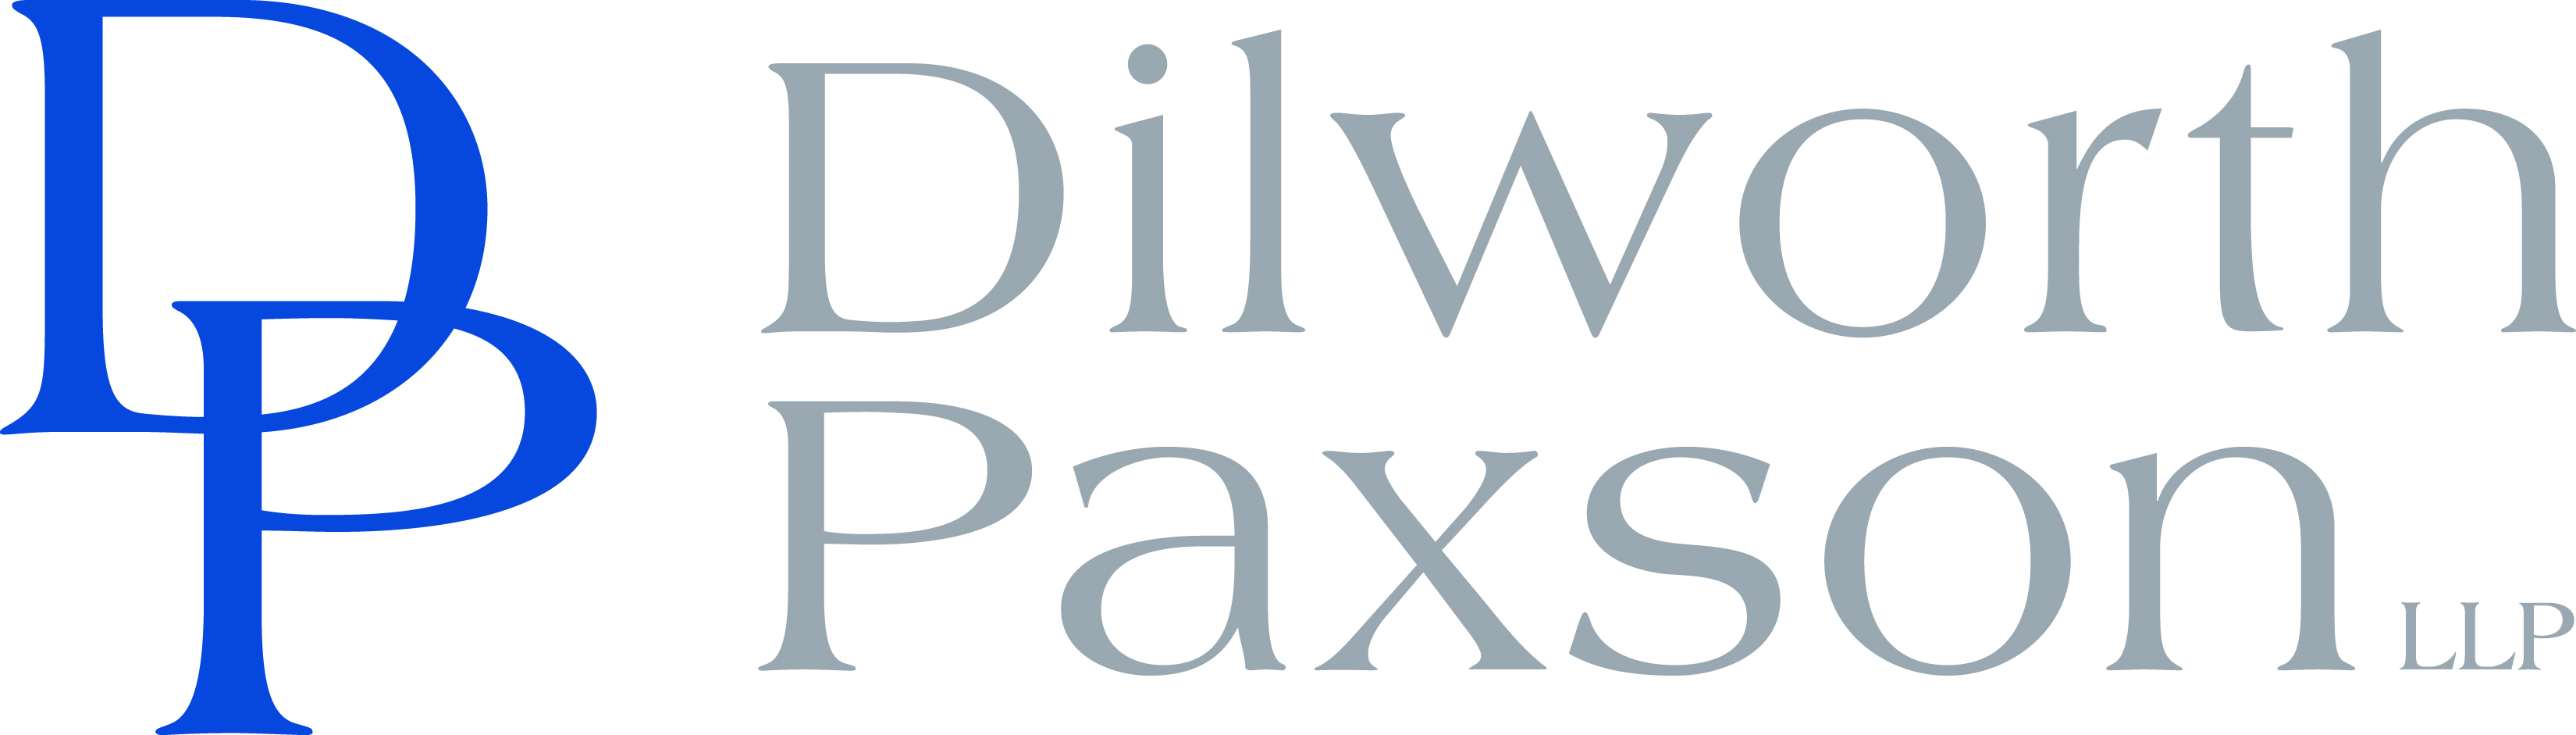 Dilworth Paxson